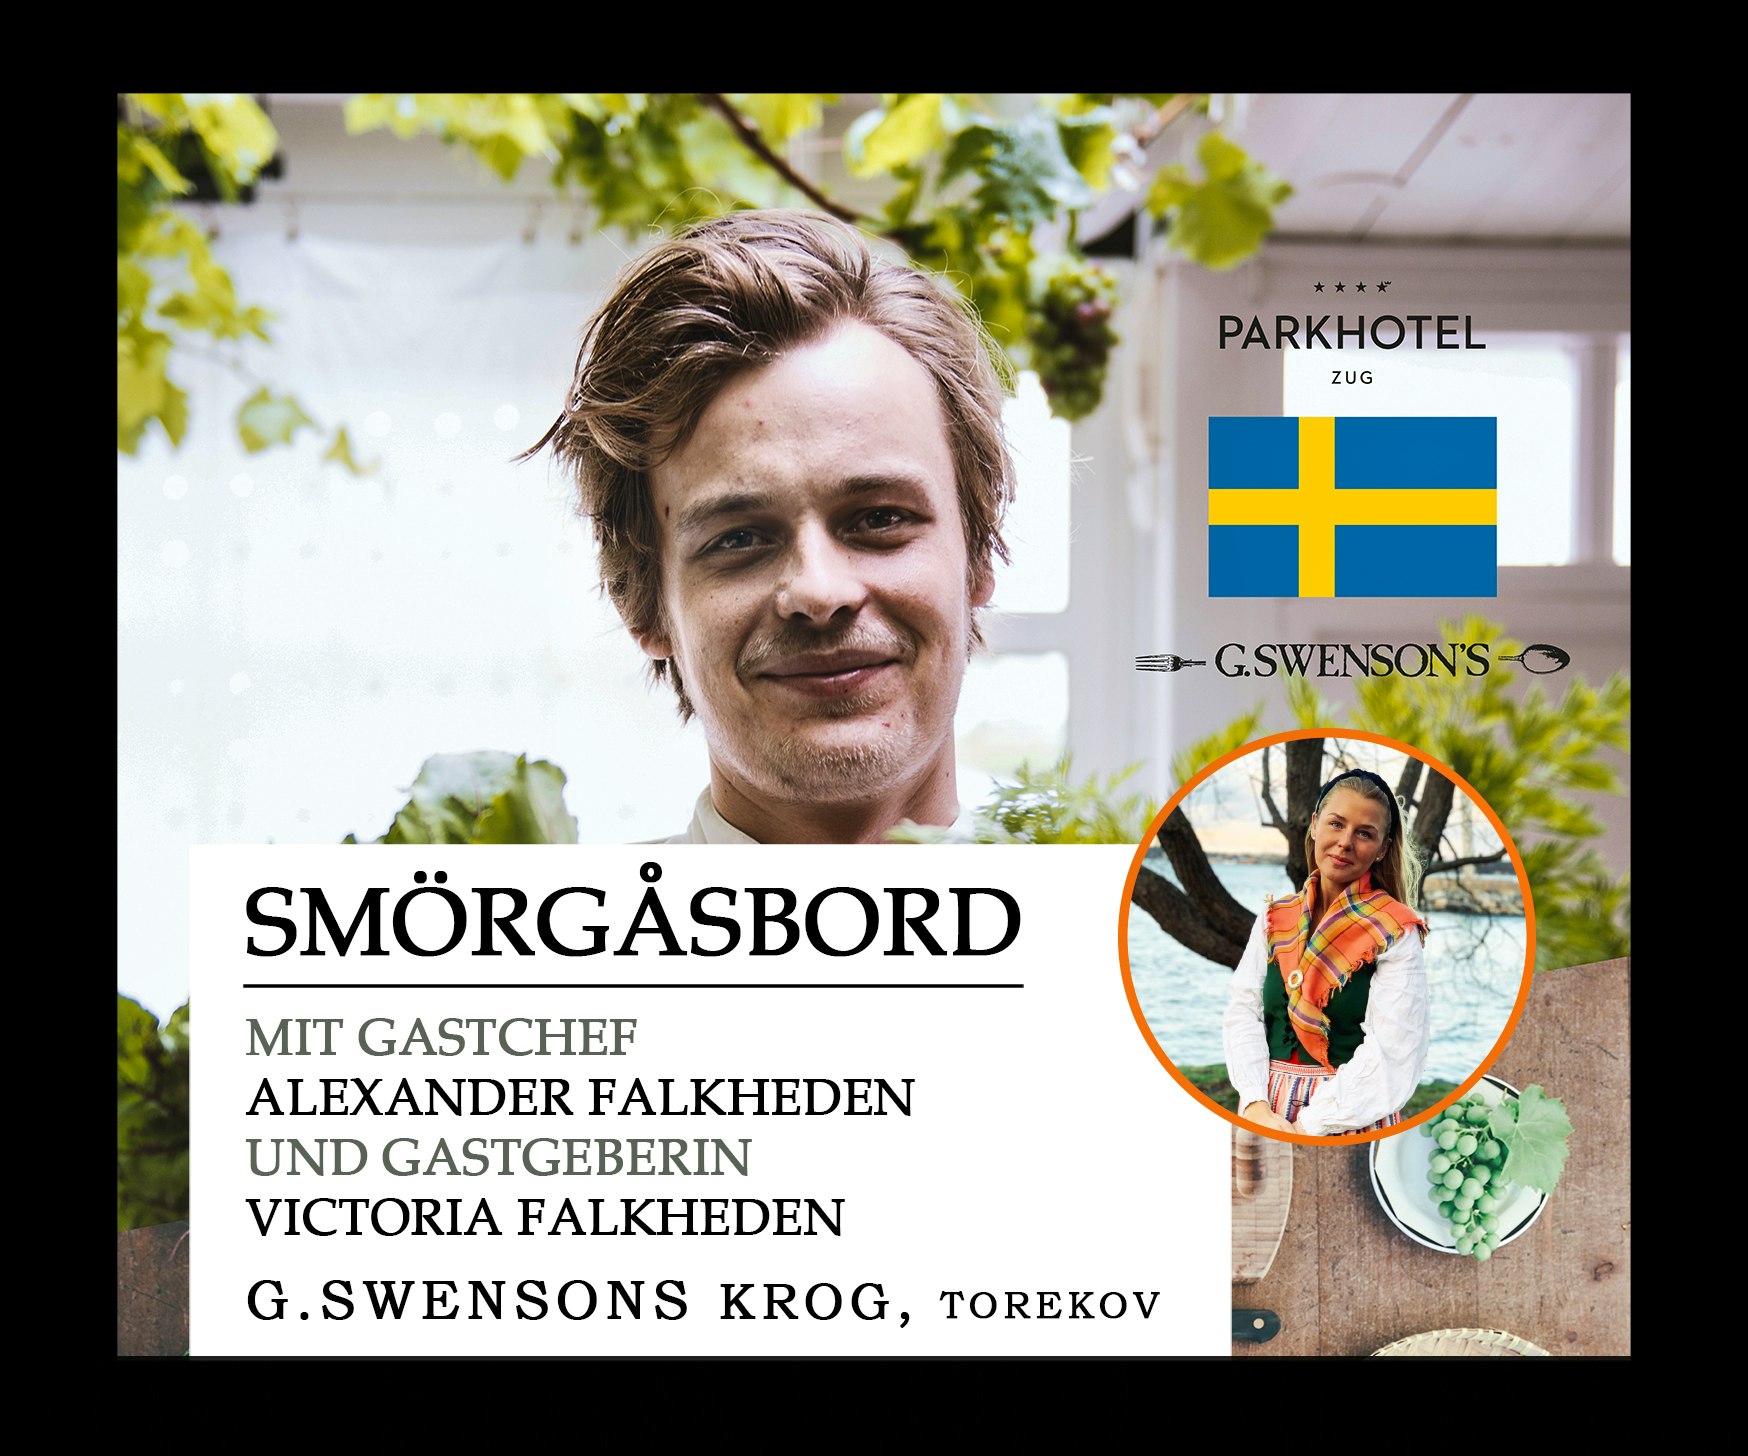 Swedish weeks -&nbsp;Sm&ouml;rg&aring;sbord<br>
Parkhotel Restaurant